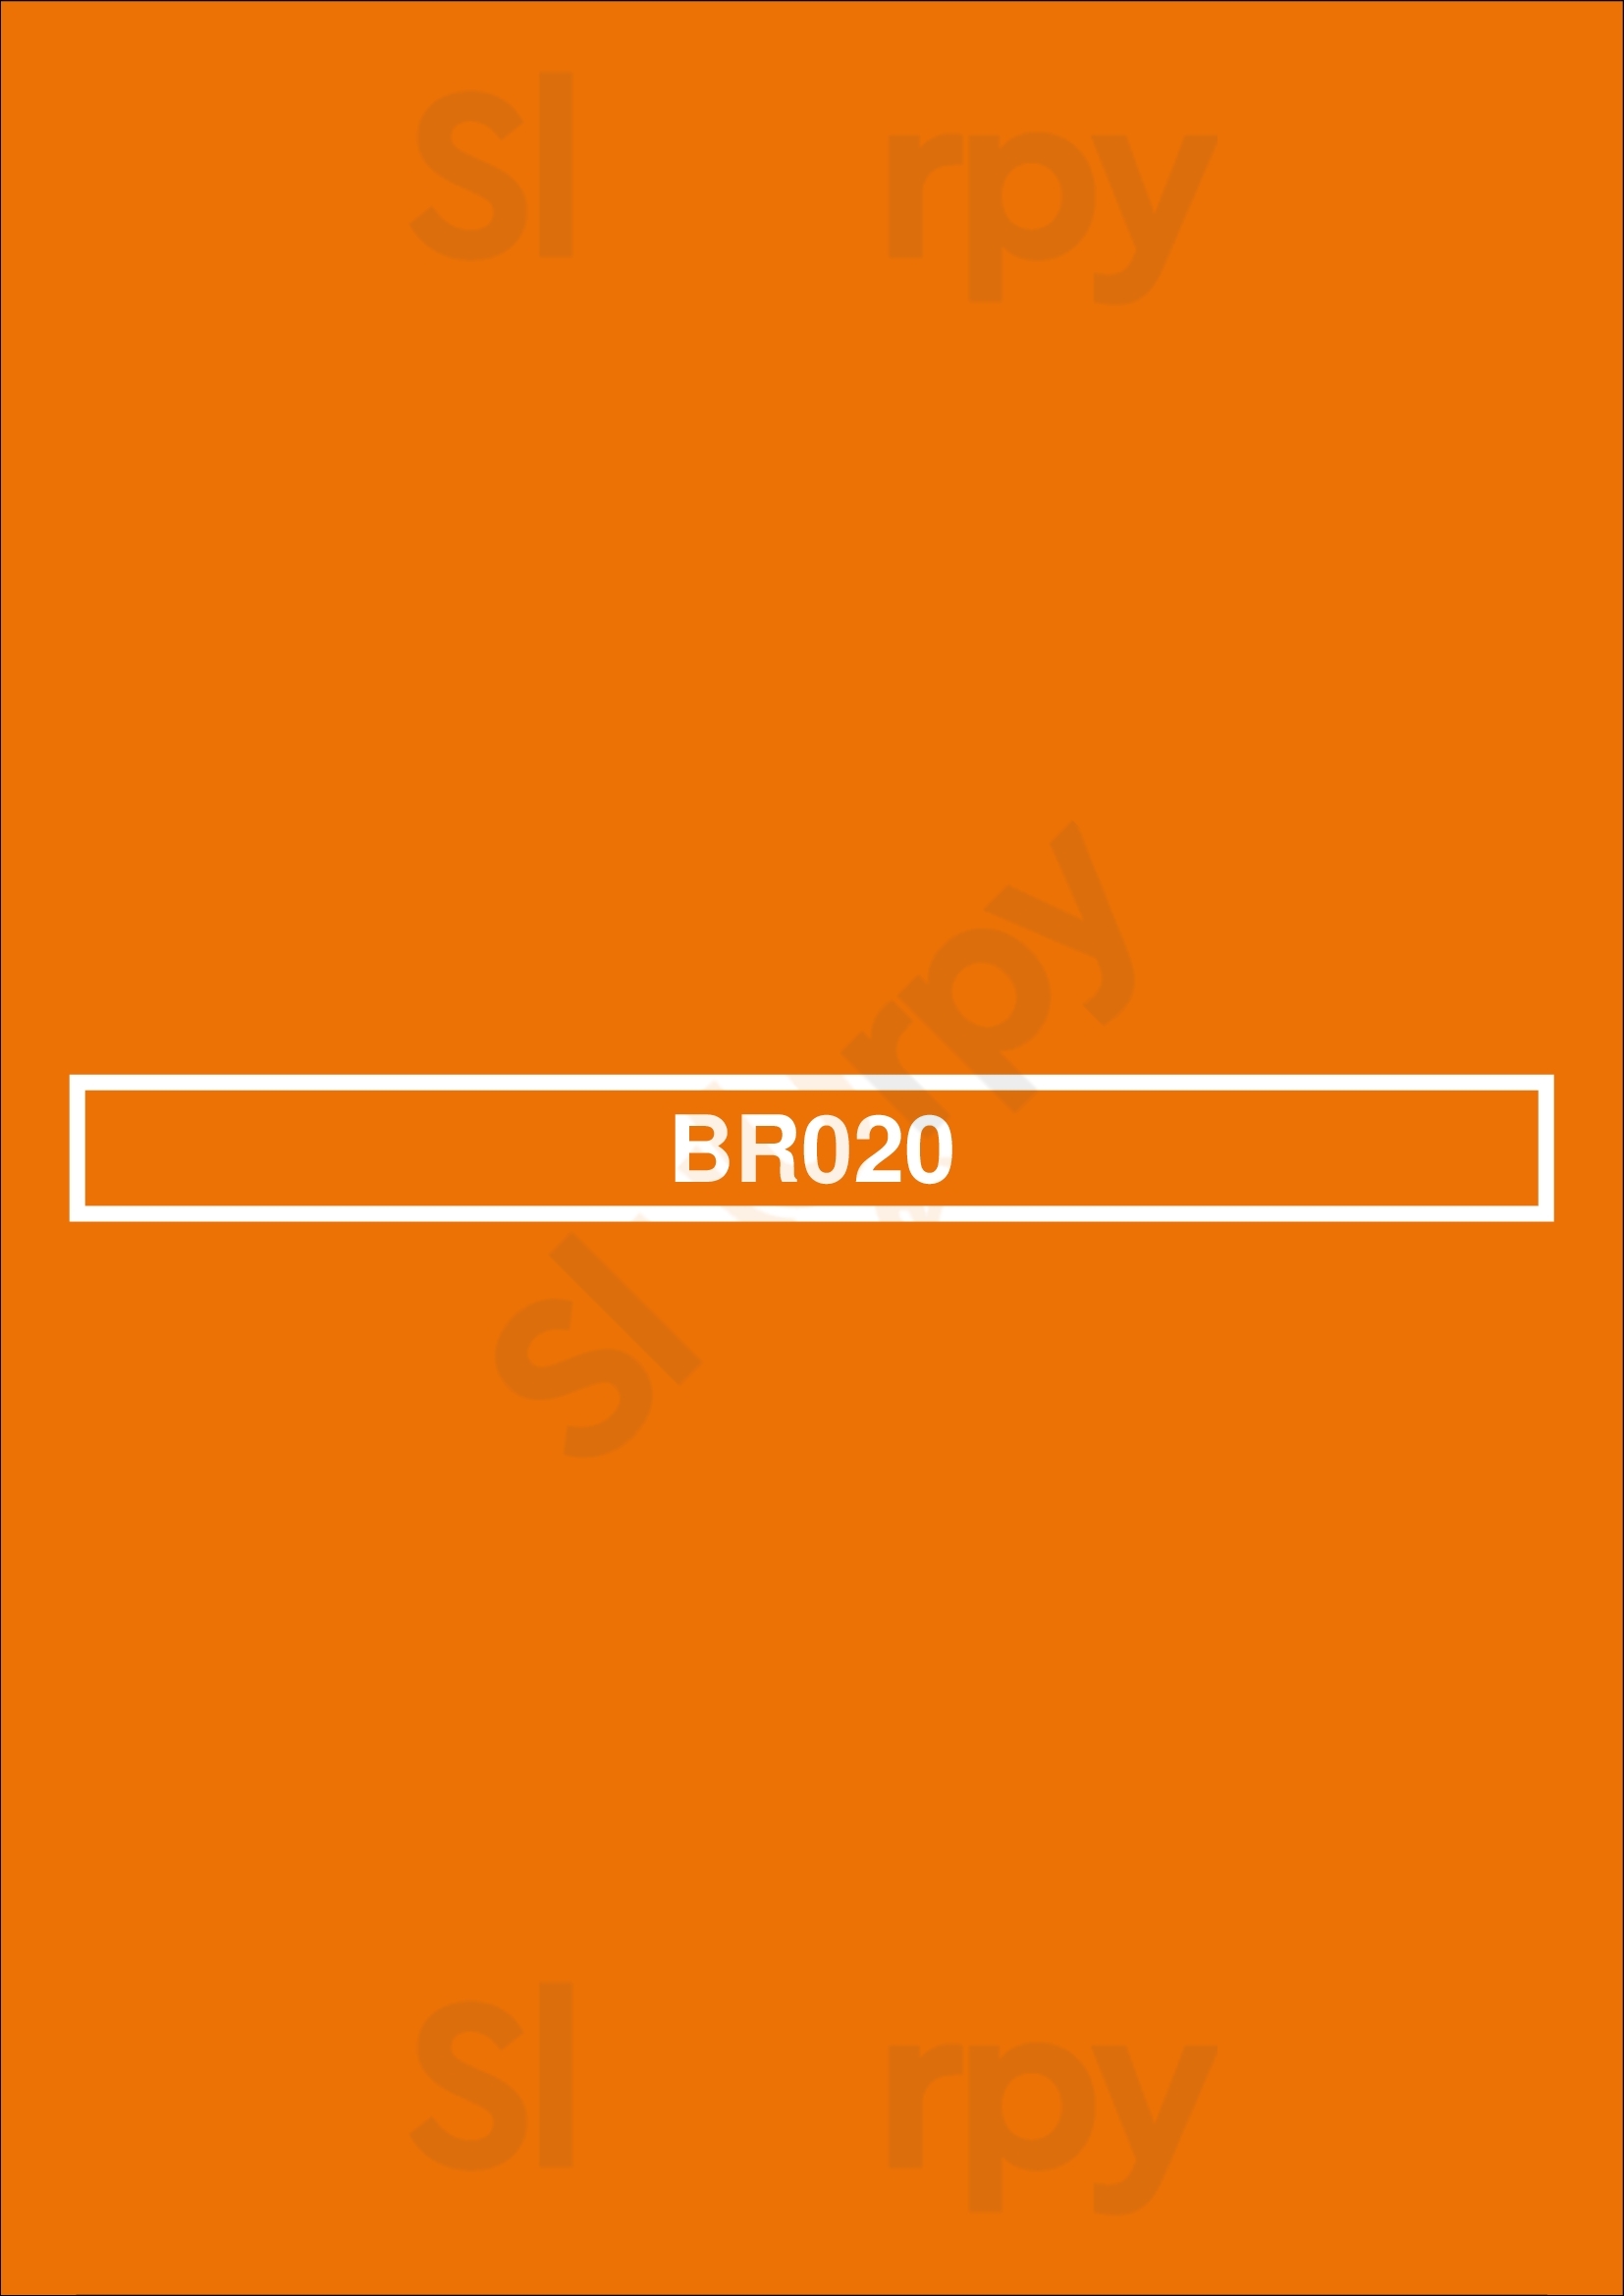 Br020 Amsterdam Menu - 1